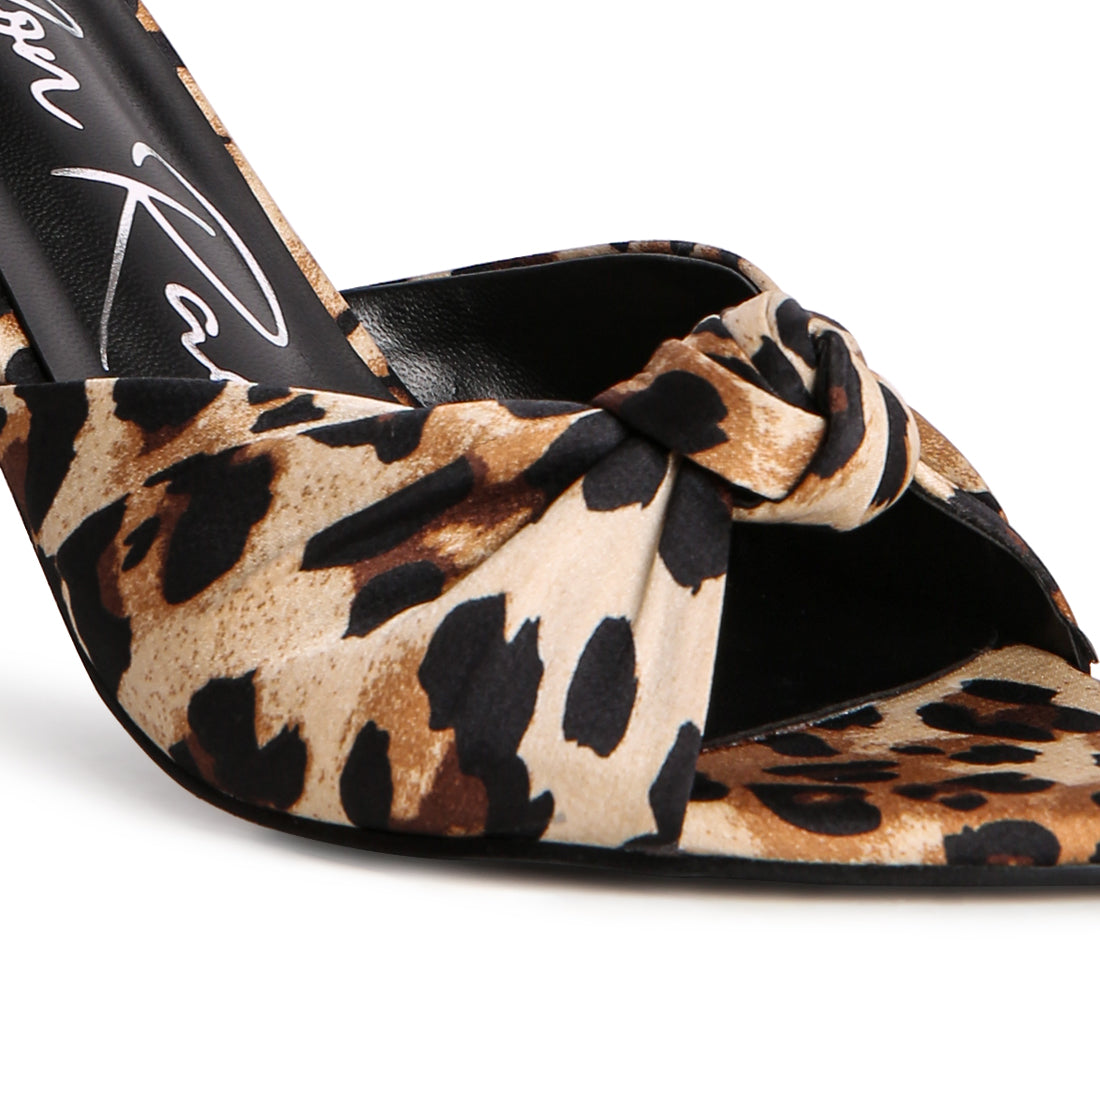 Satin Knot High Heeled Sandal in Leopard Print